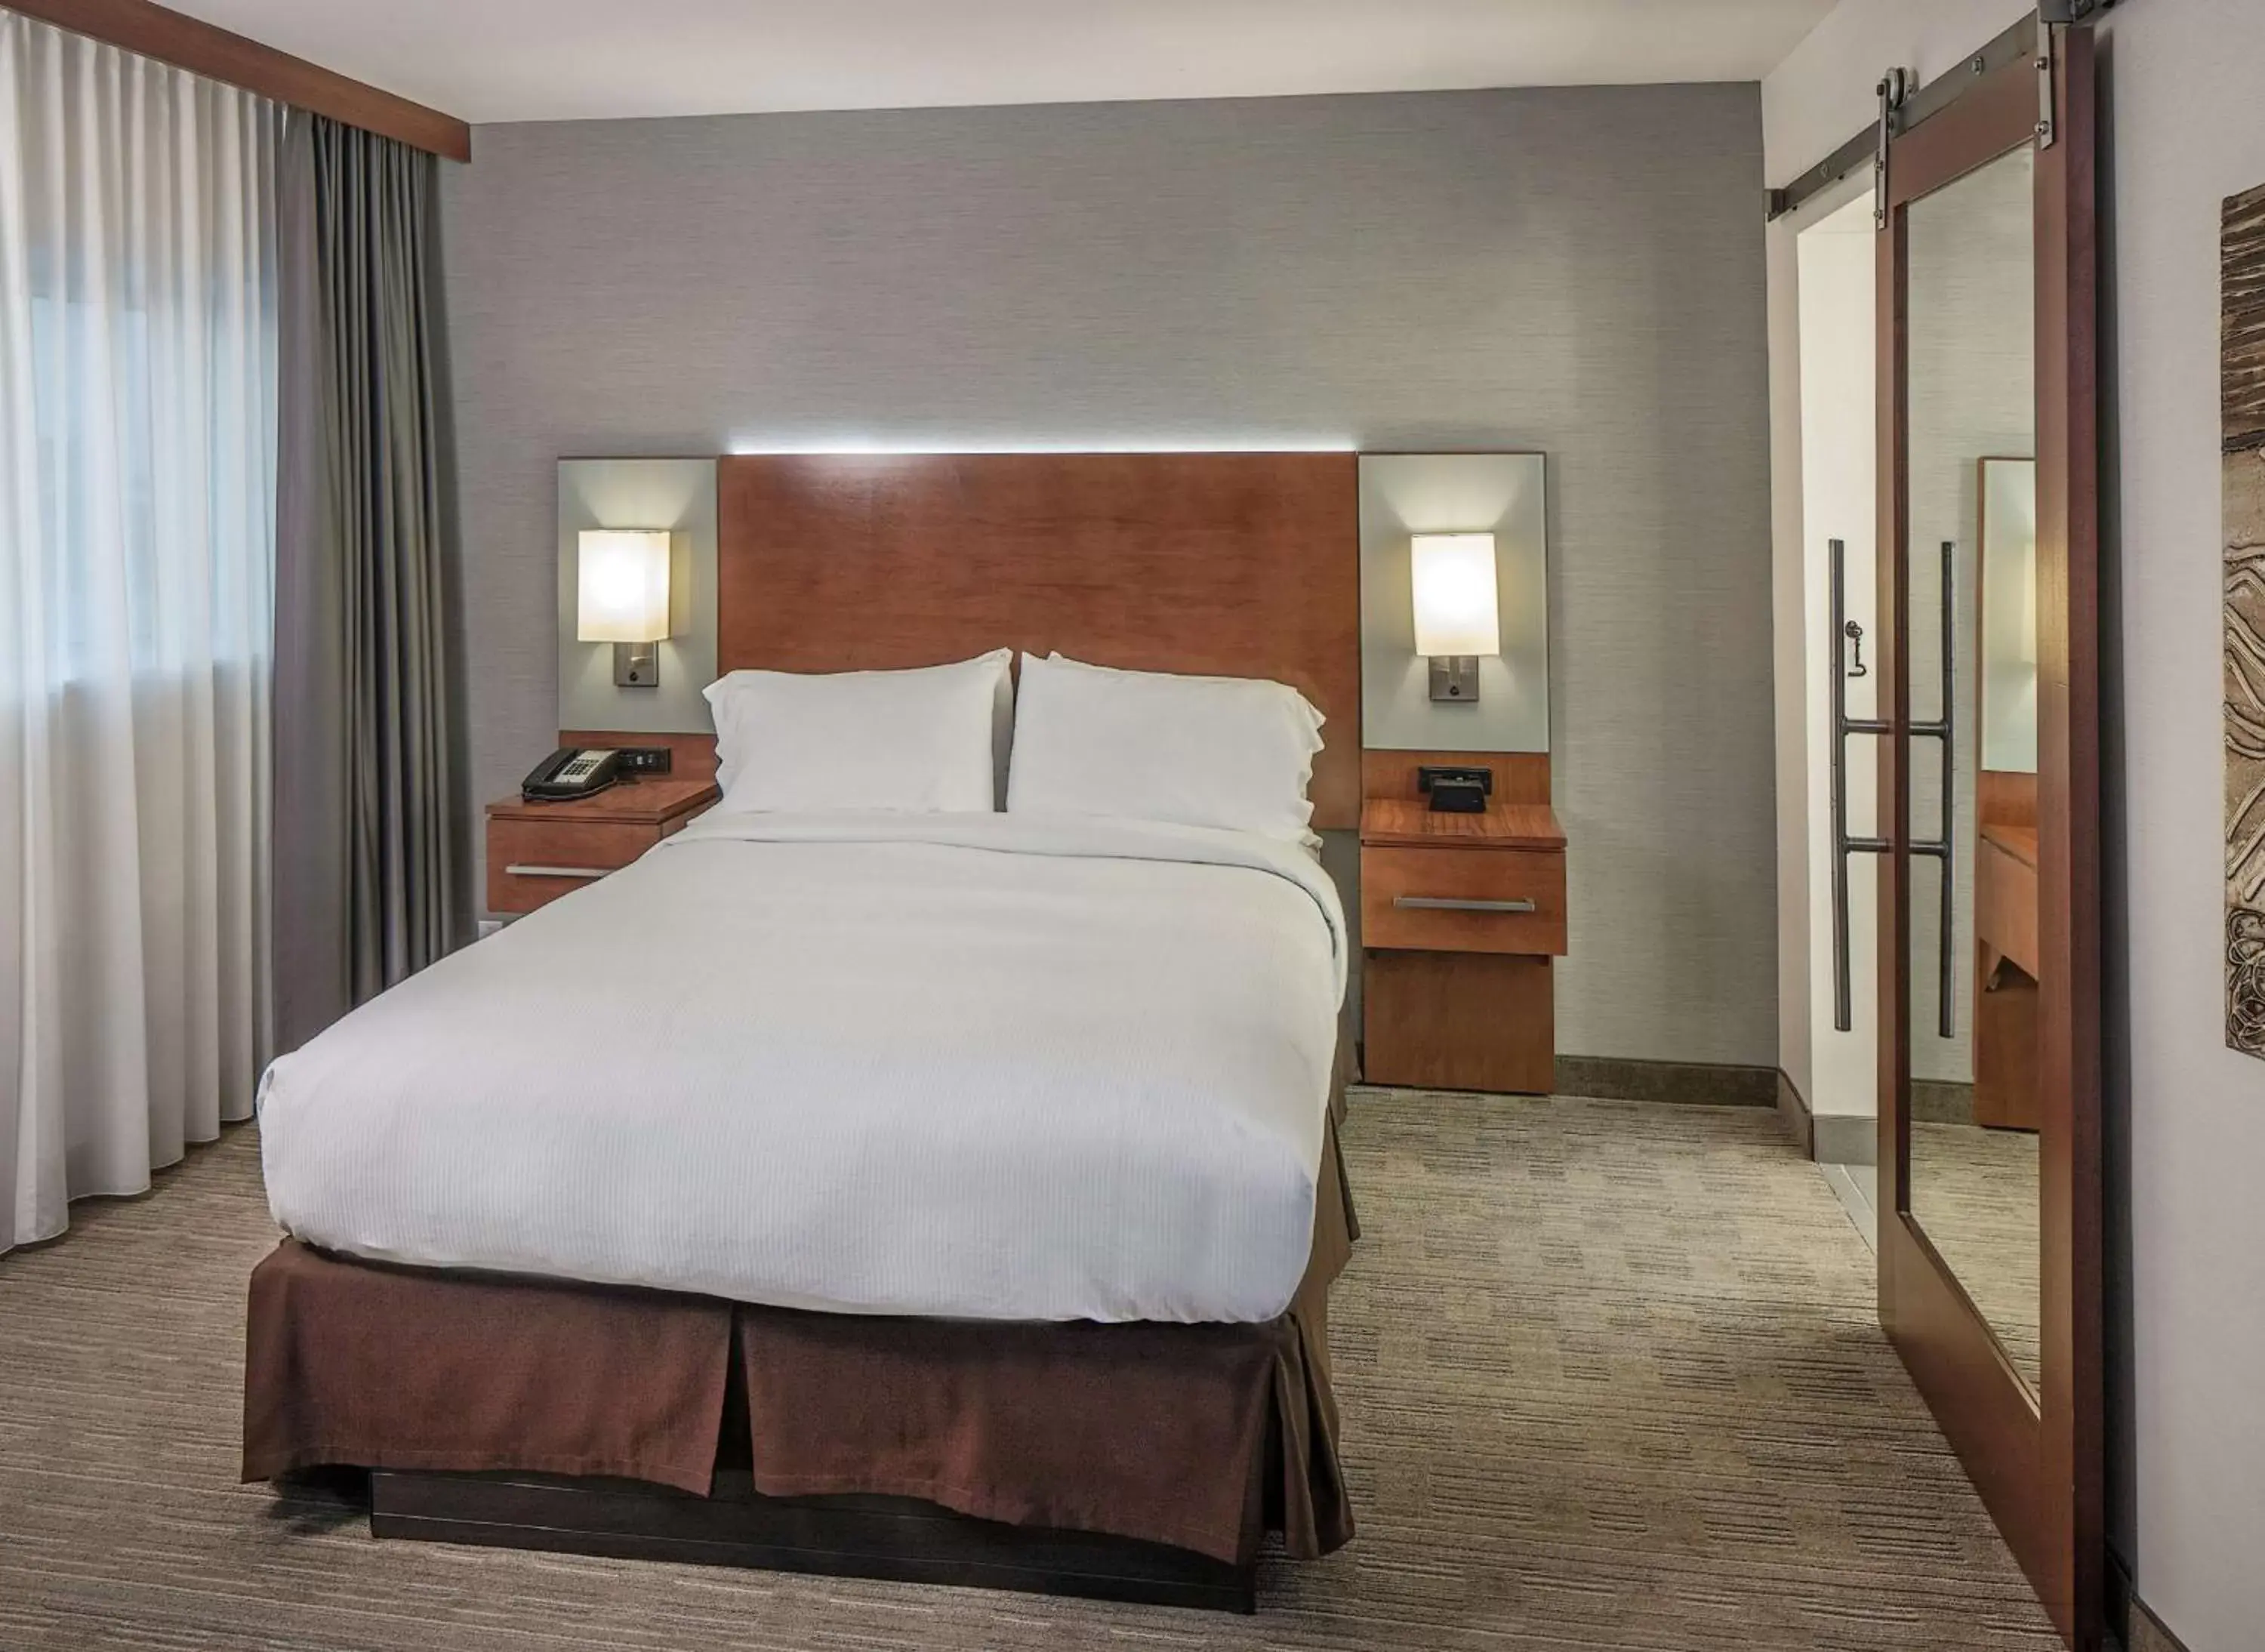 Bed in Doubletree By Hilton Omaha Southwest, Ne